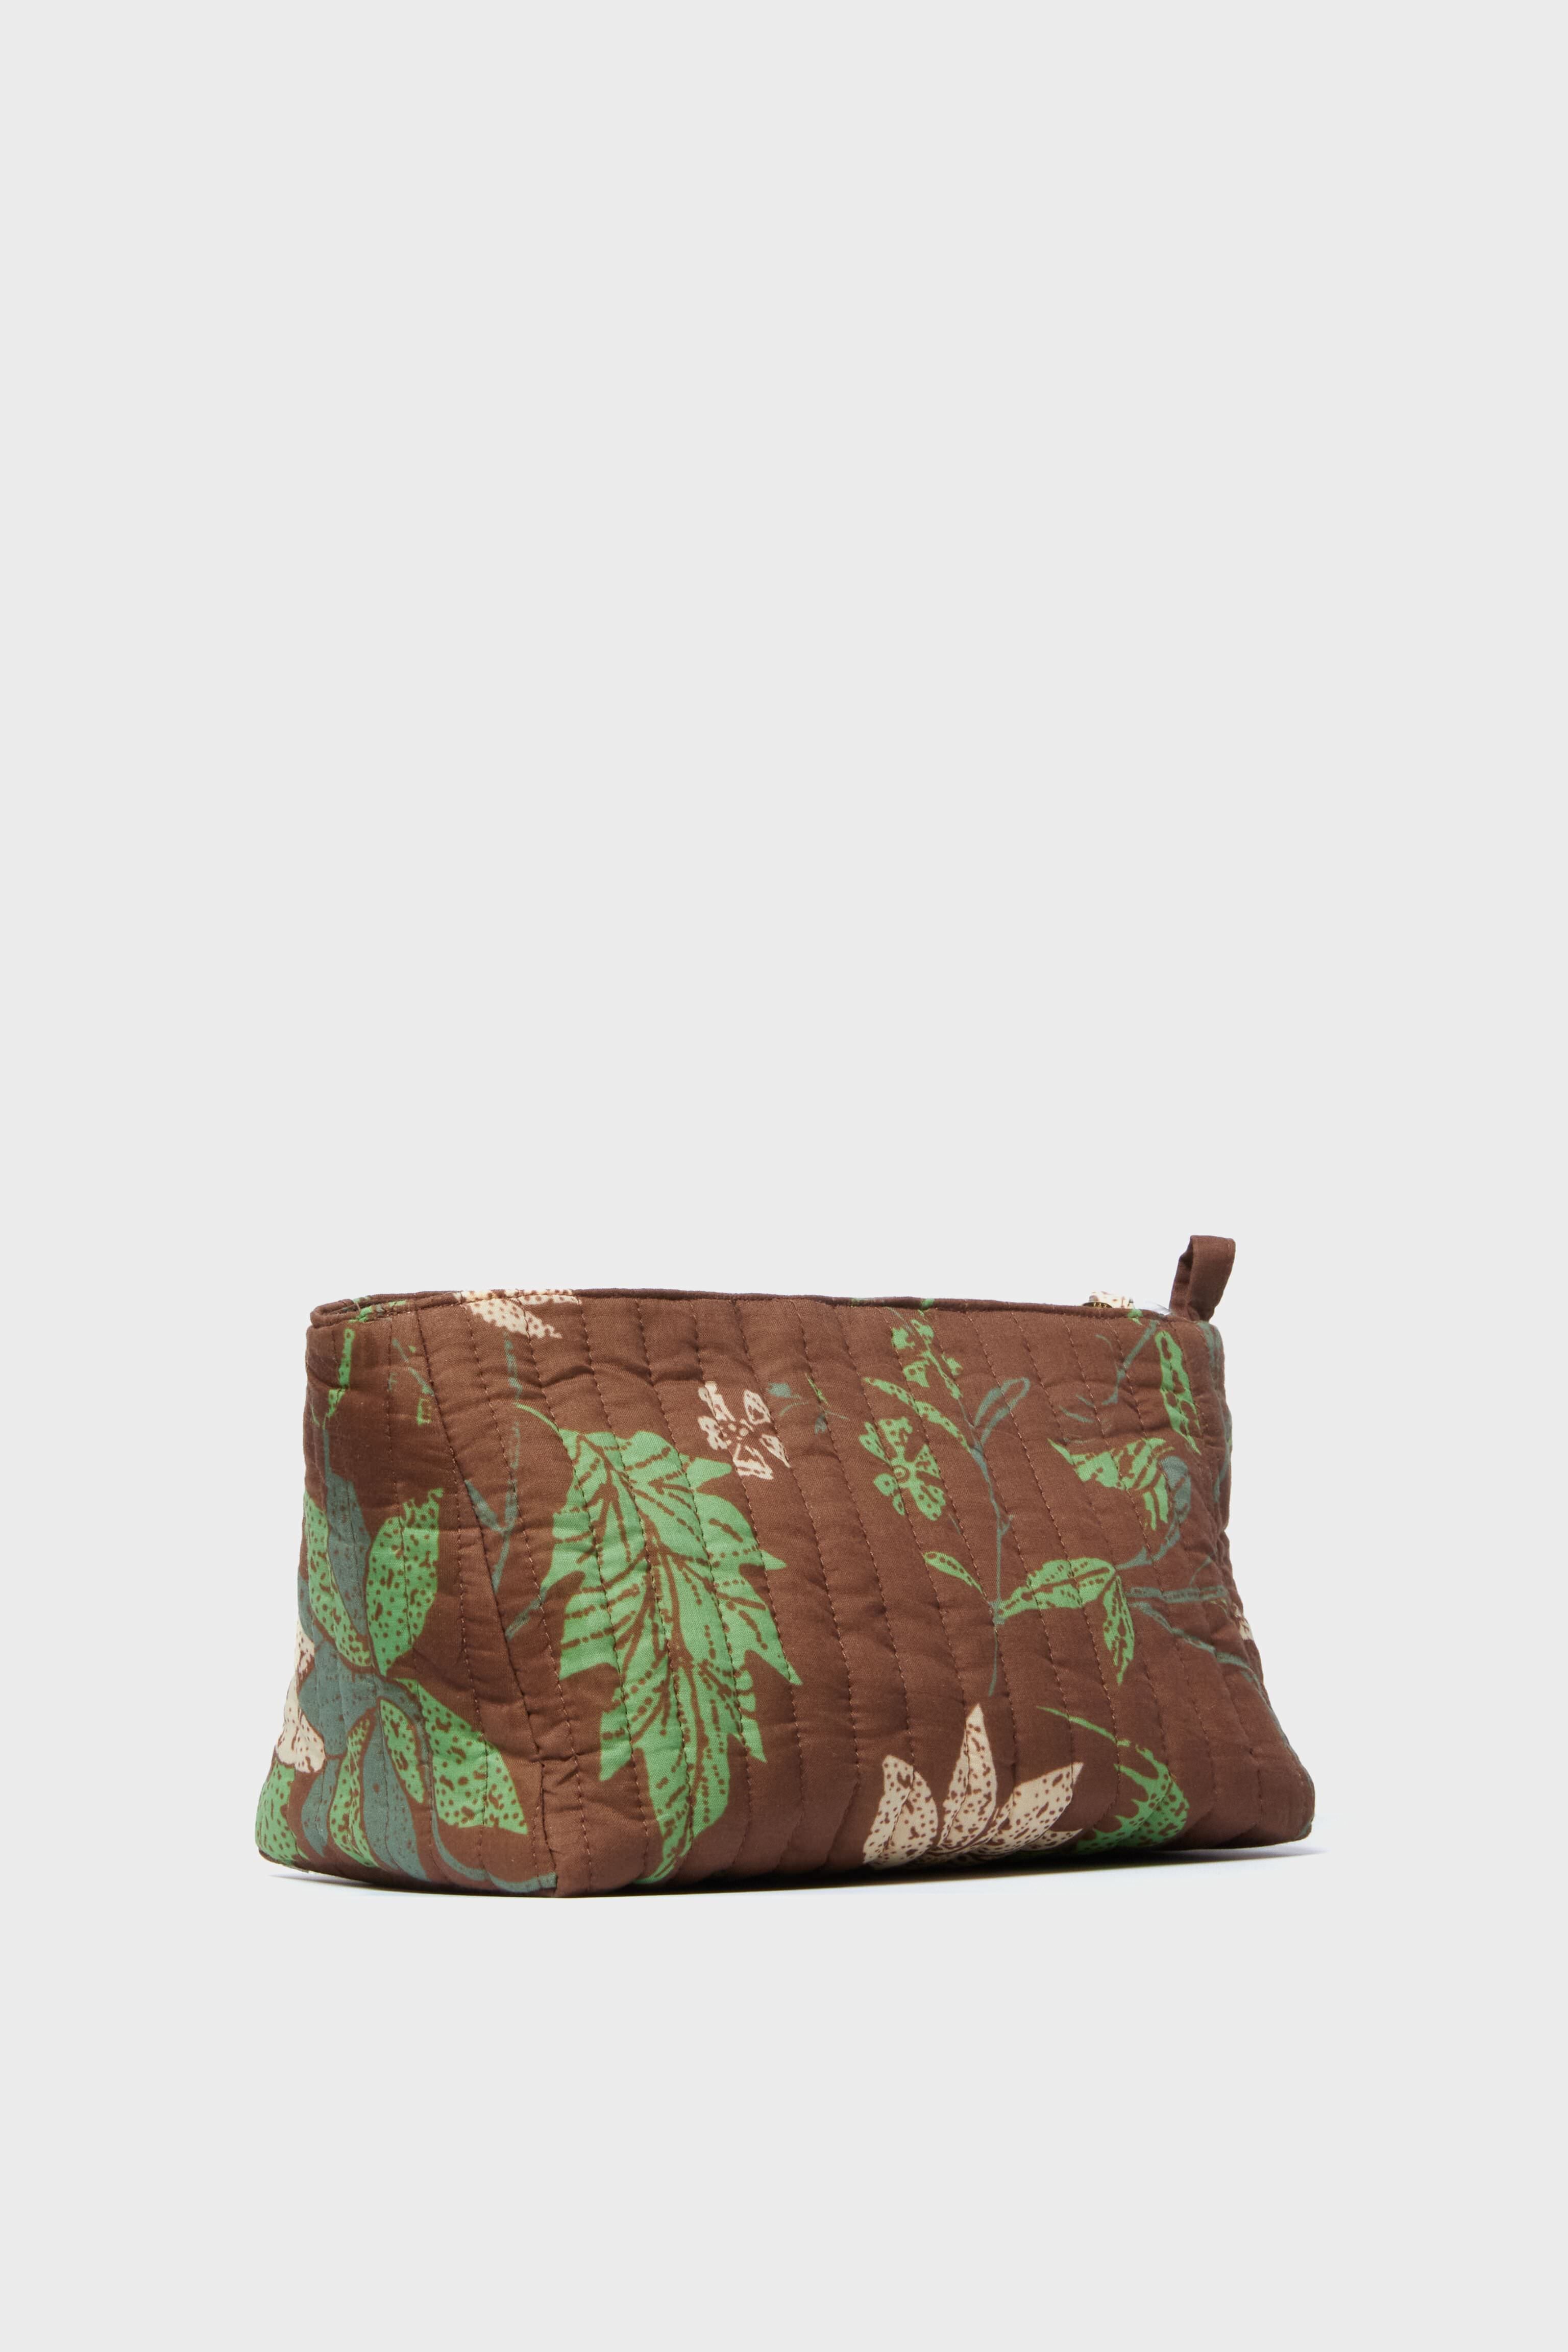 Handbag in faux leather and woodland fox print, vegan ladies gift,  crossbody bag